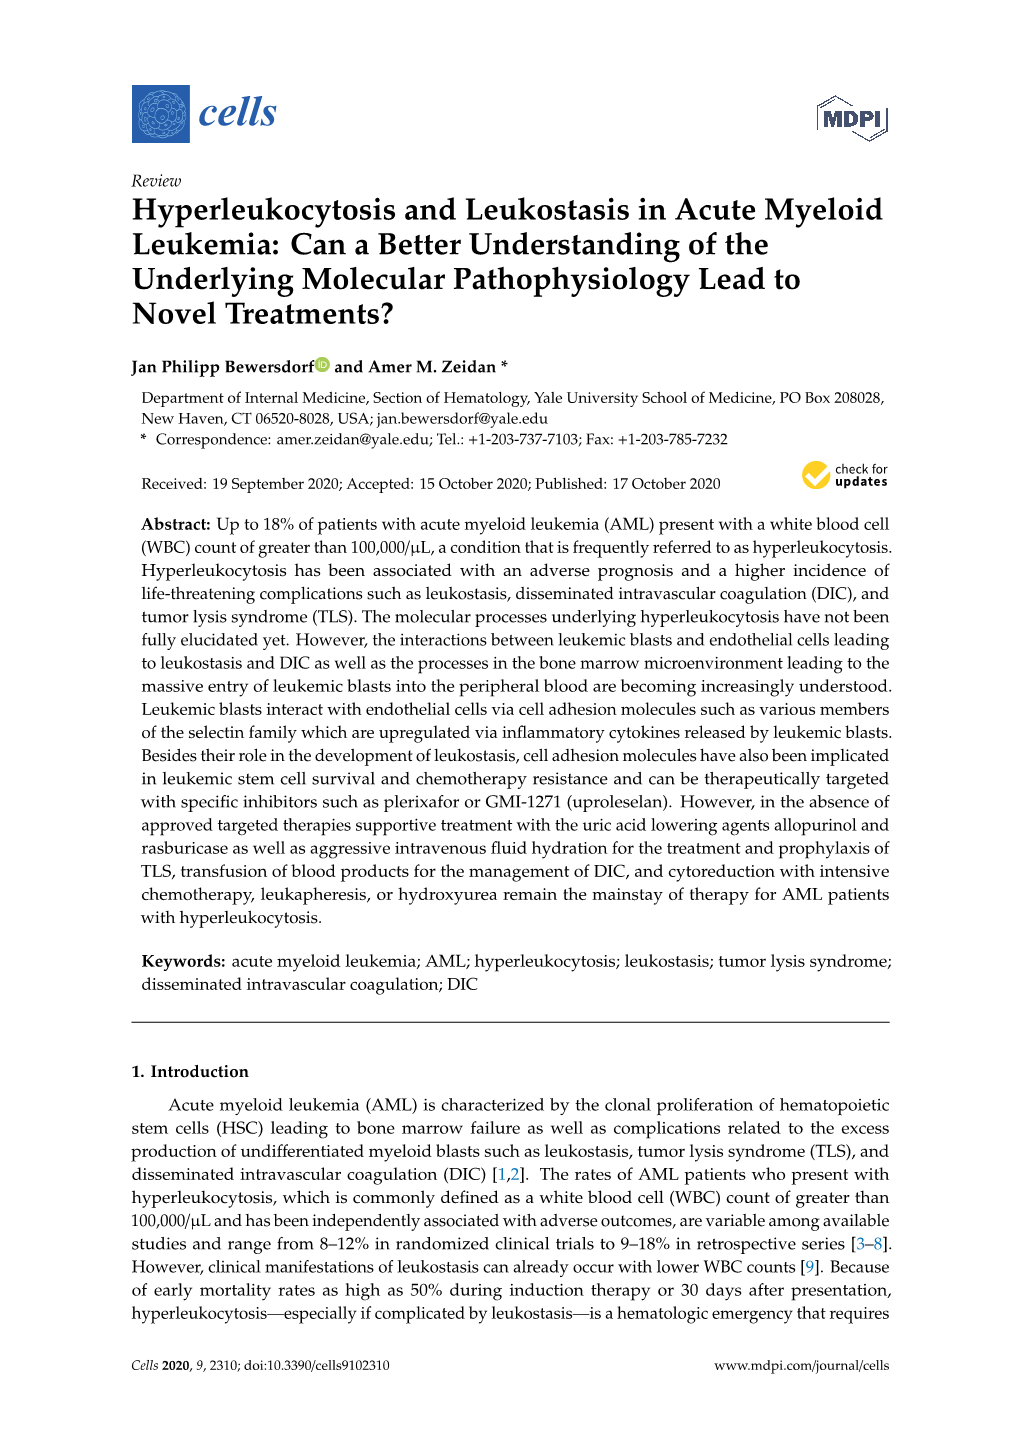 Hyperleukocytosis and Leukostasis in Acute Myeloid Leukemia: Can a Better Understanding of the Underlying Molecular Pathophysiology Lead to Novel Treatments?